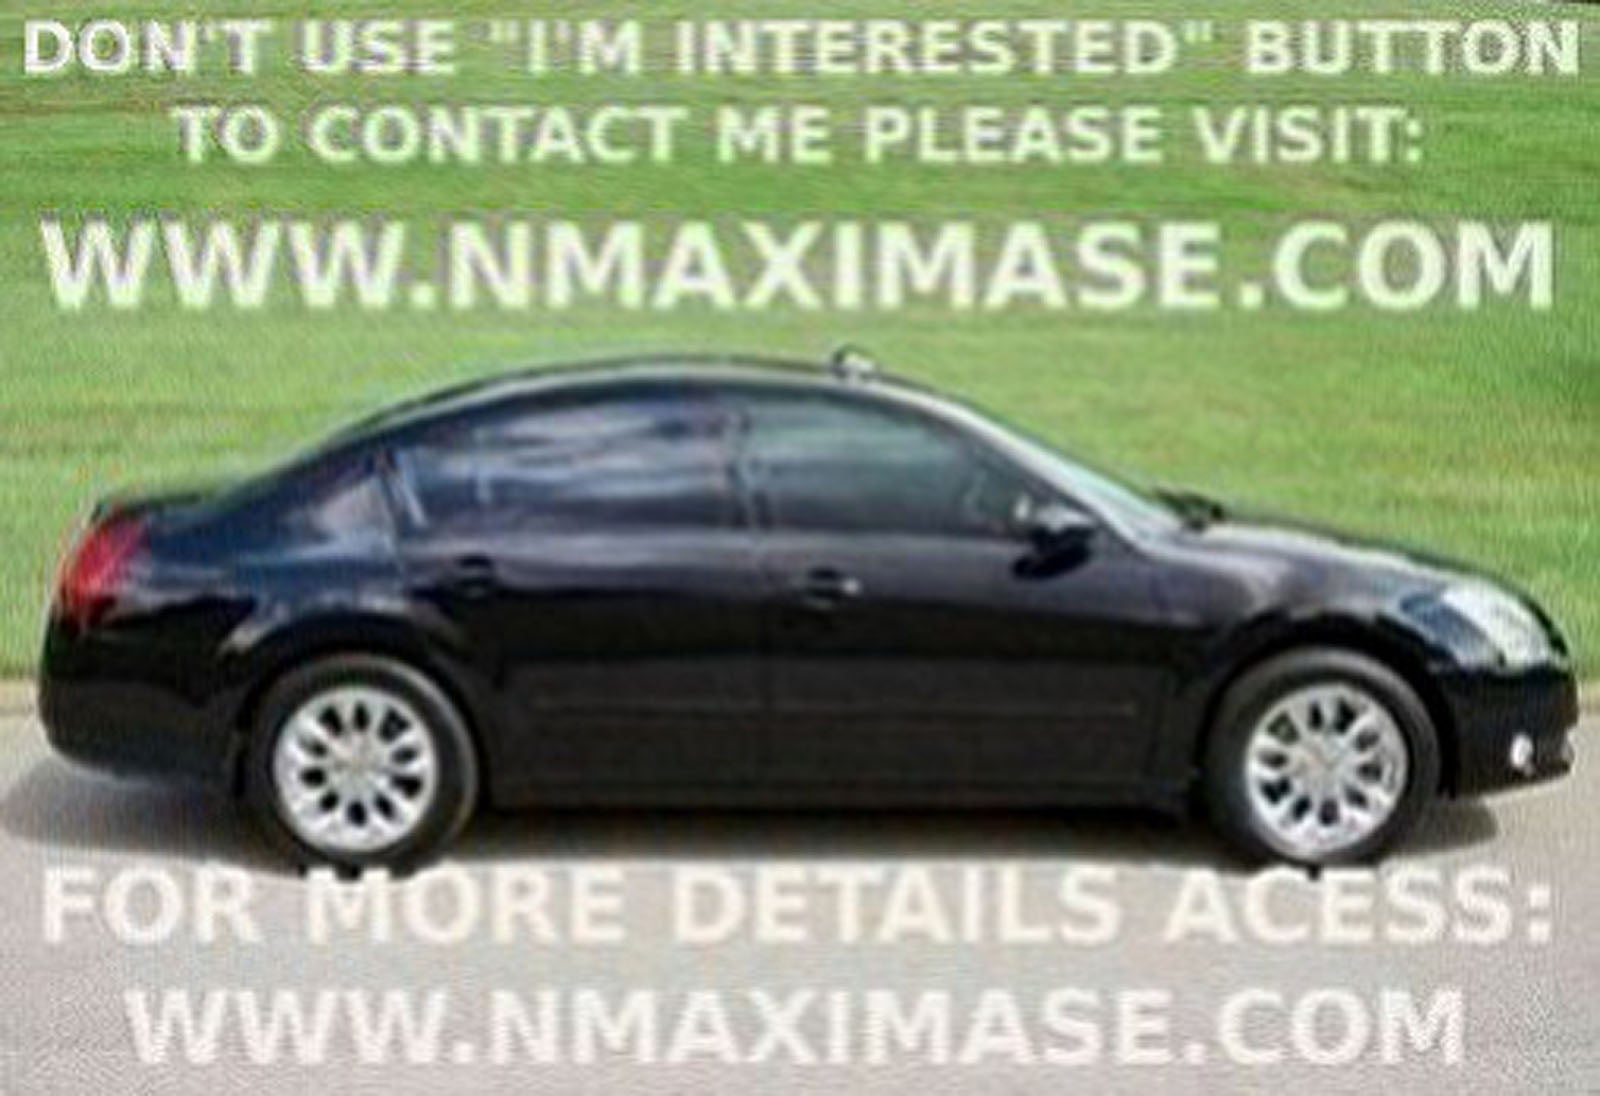 2004 Nissan maxima for sale austin tx #2